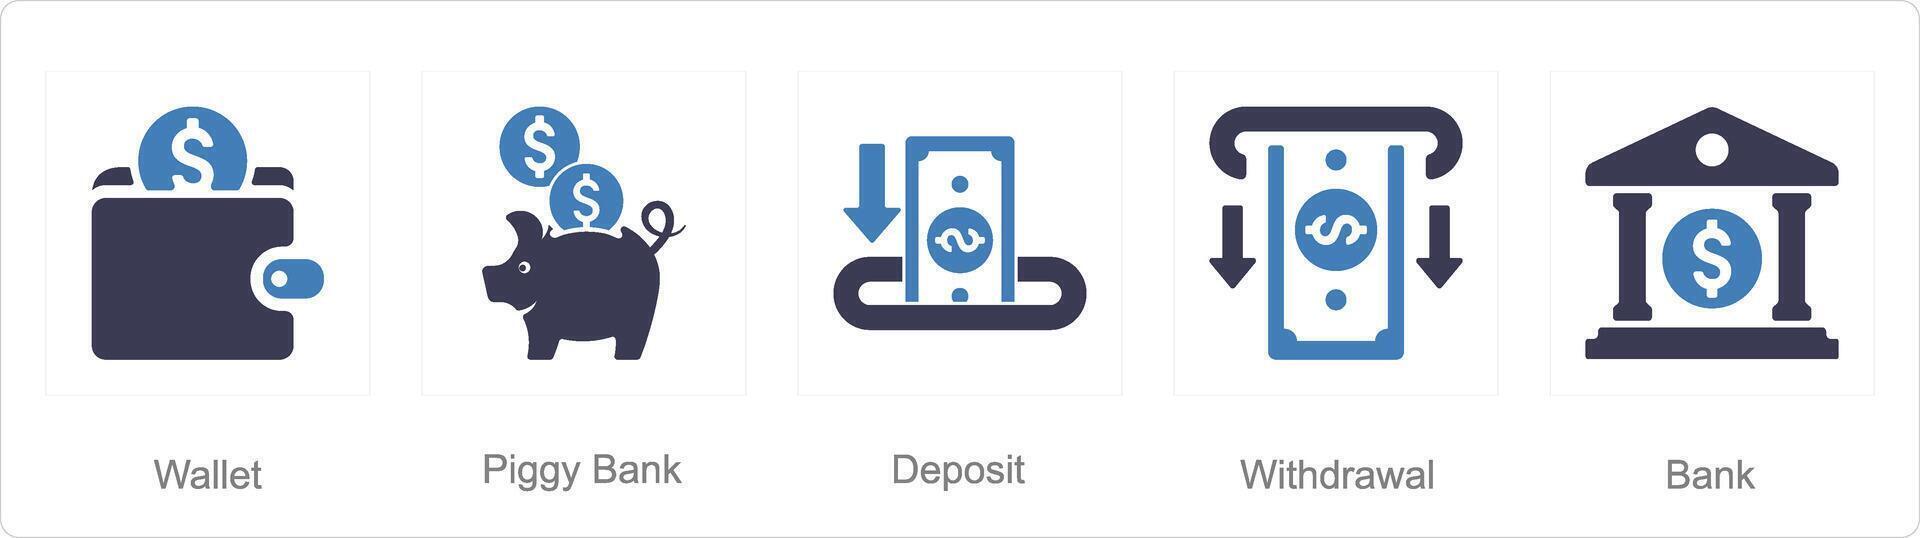 A set of 5 Finance icons as wallet, piggy bank, deposit vector